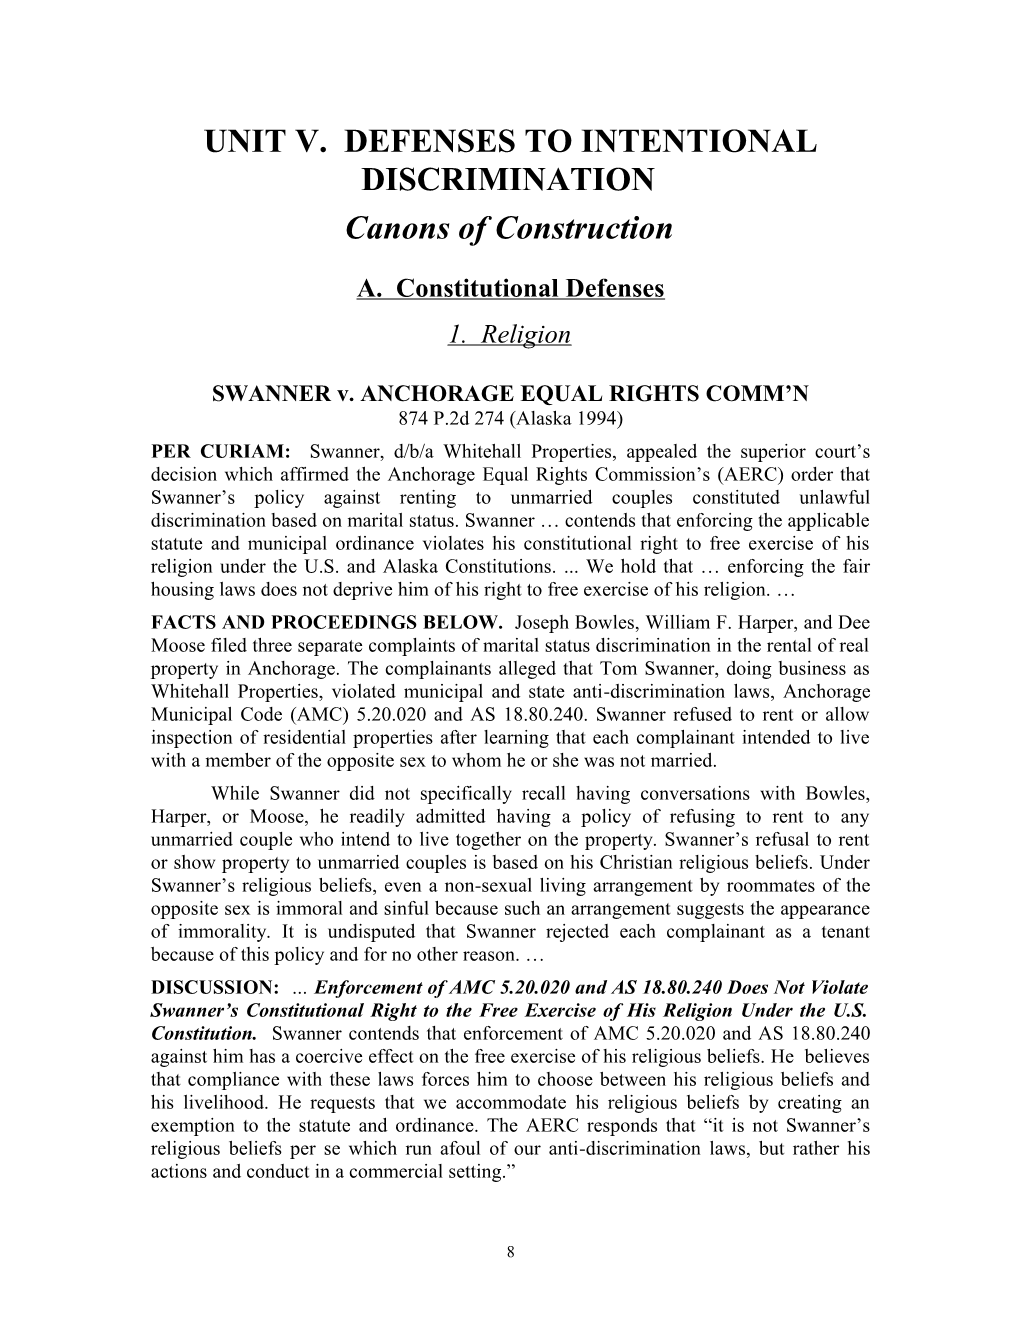 Unit V. Defenses to Intentional Discrimination